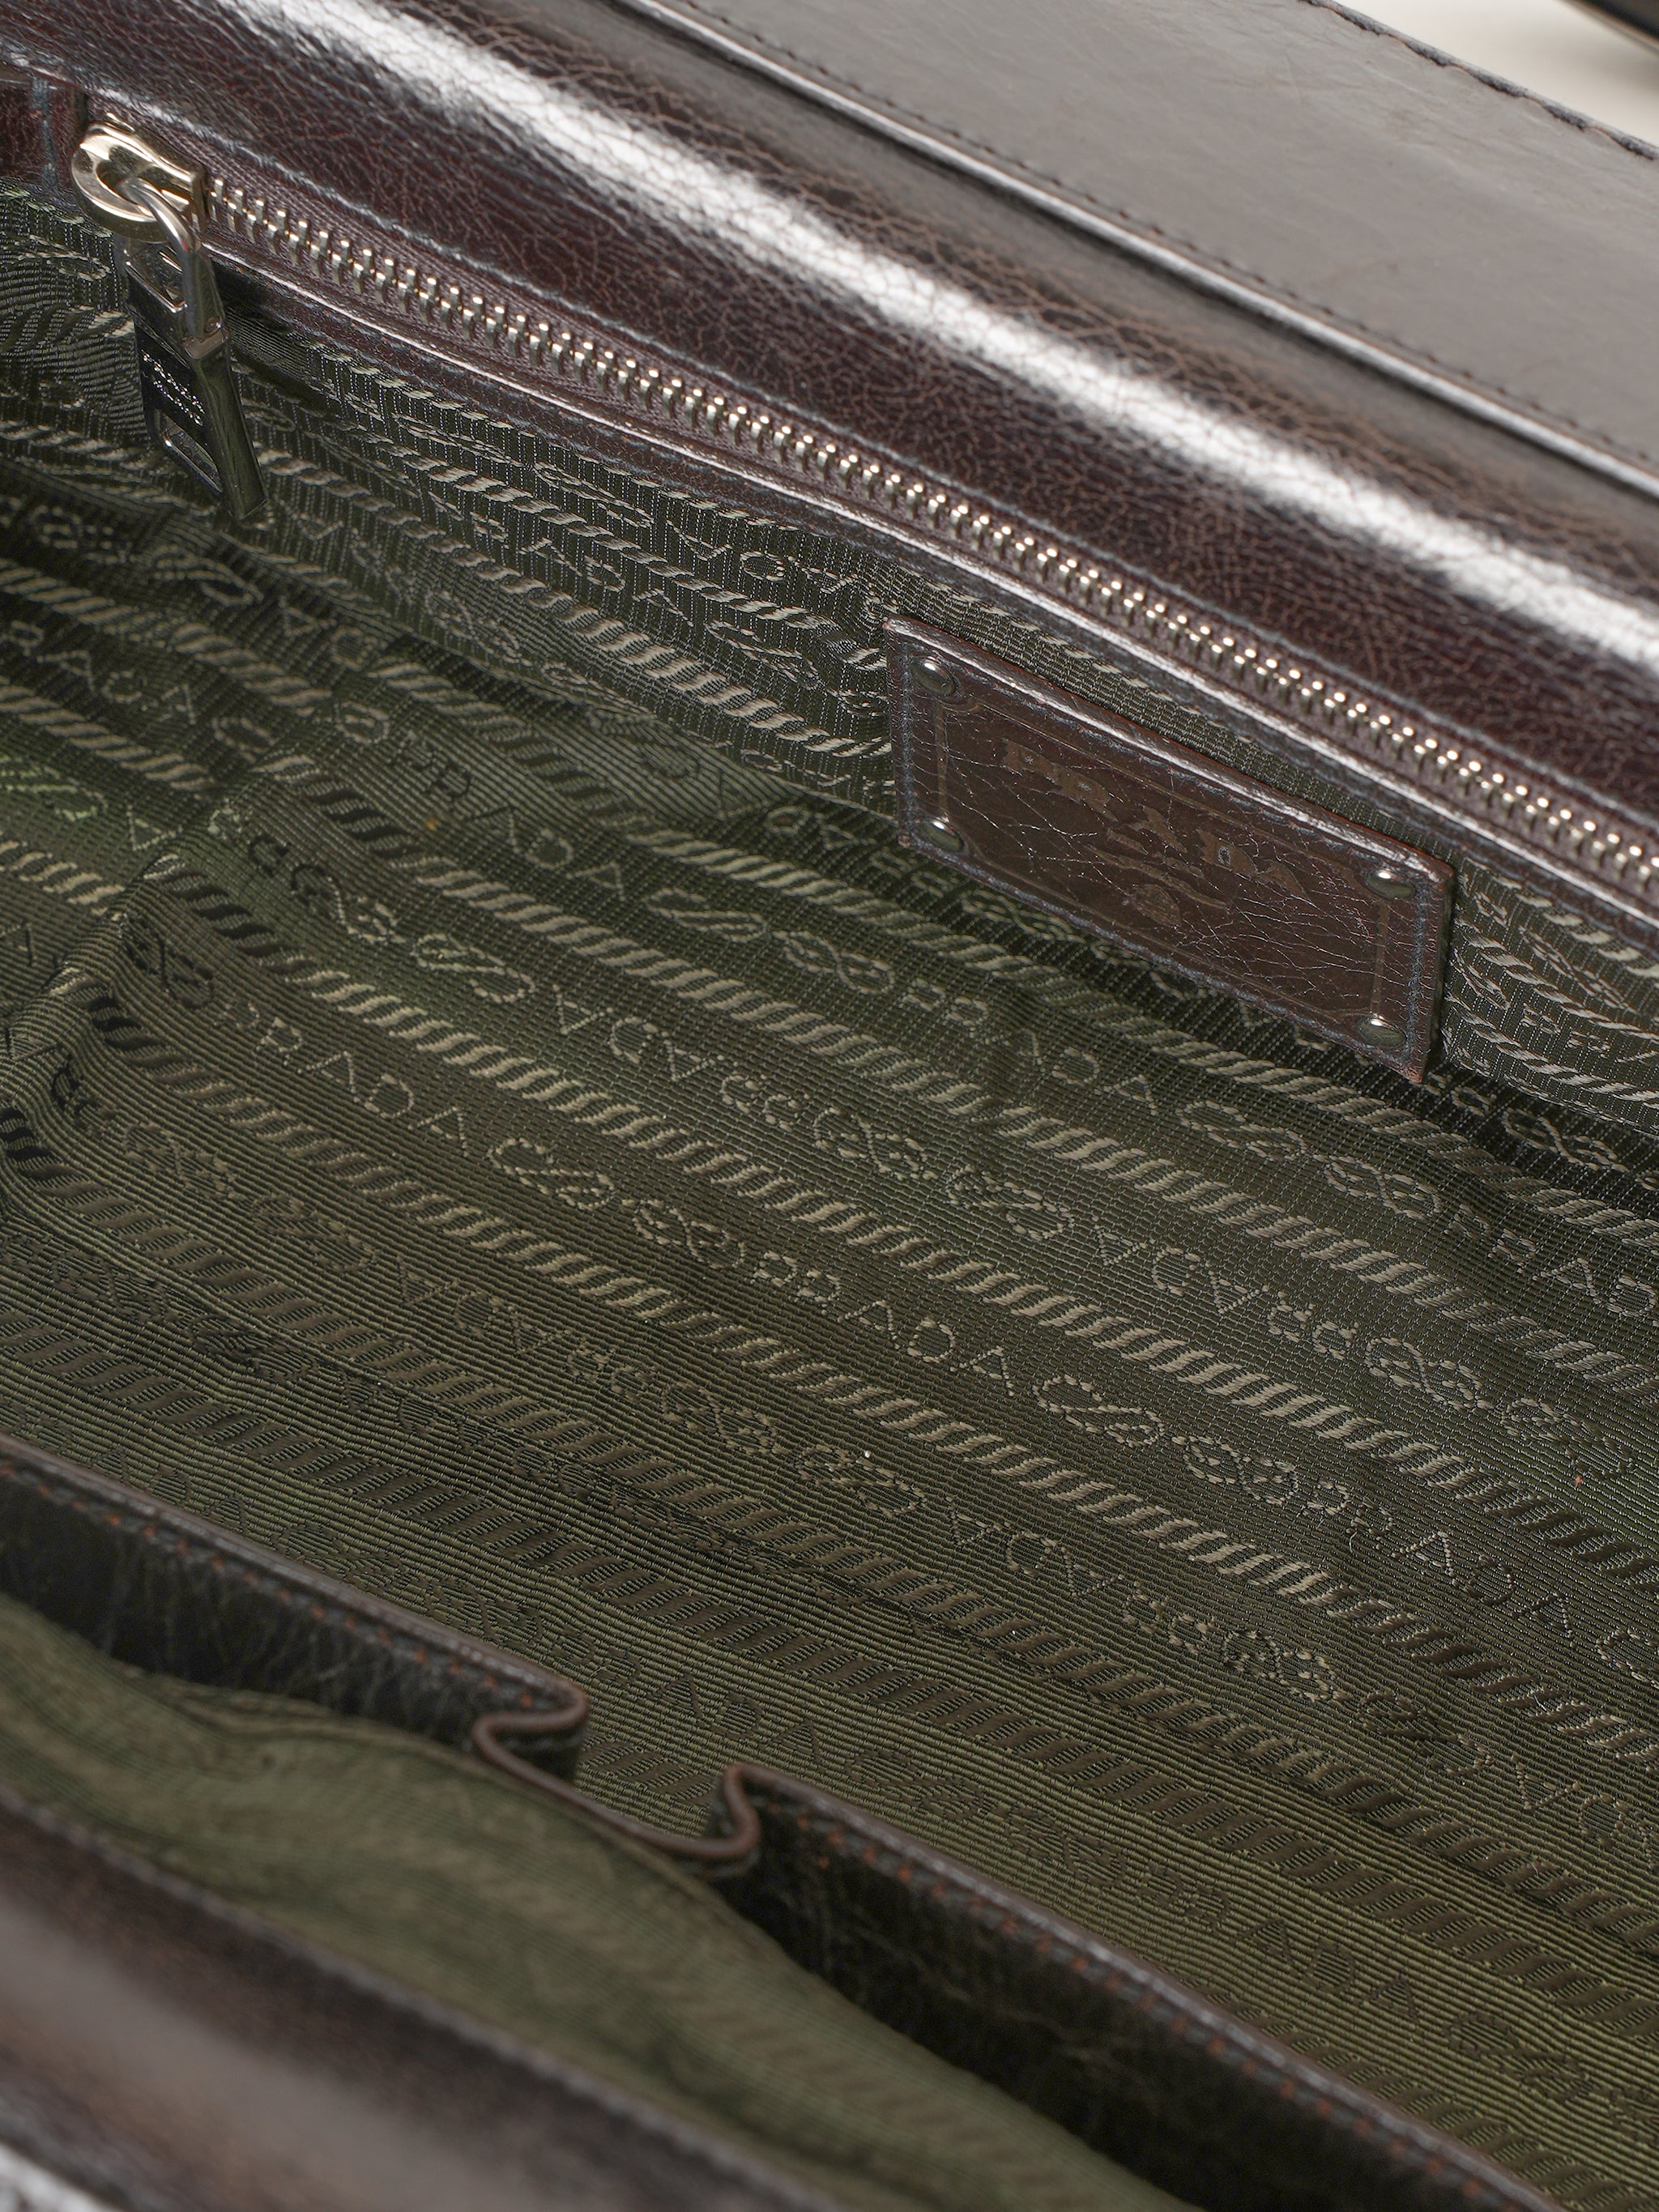 Prada Bauletto Handbag Black in Leather with Silver-tone - US